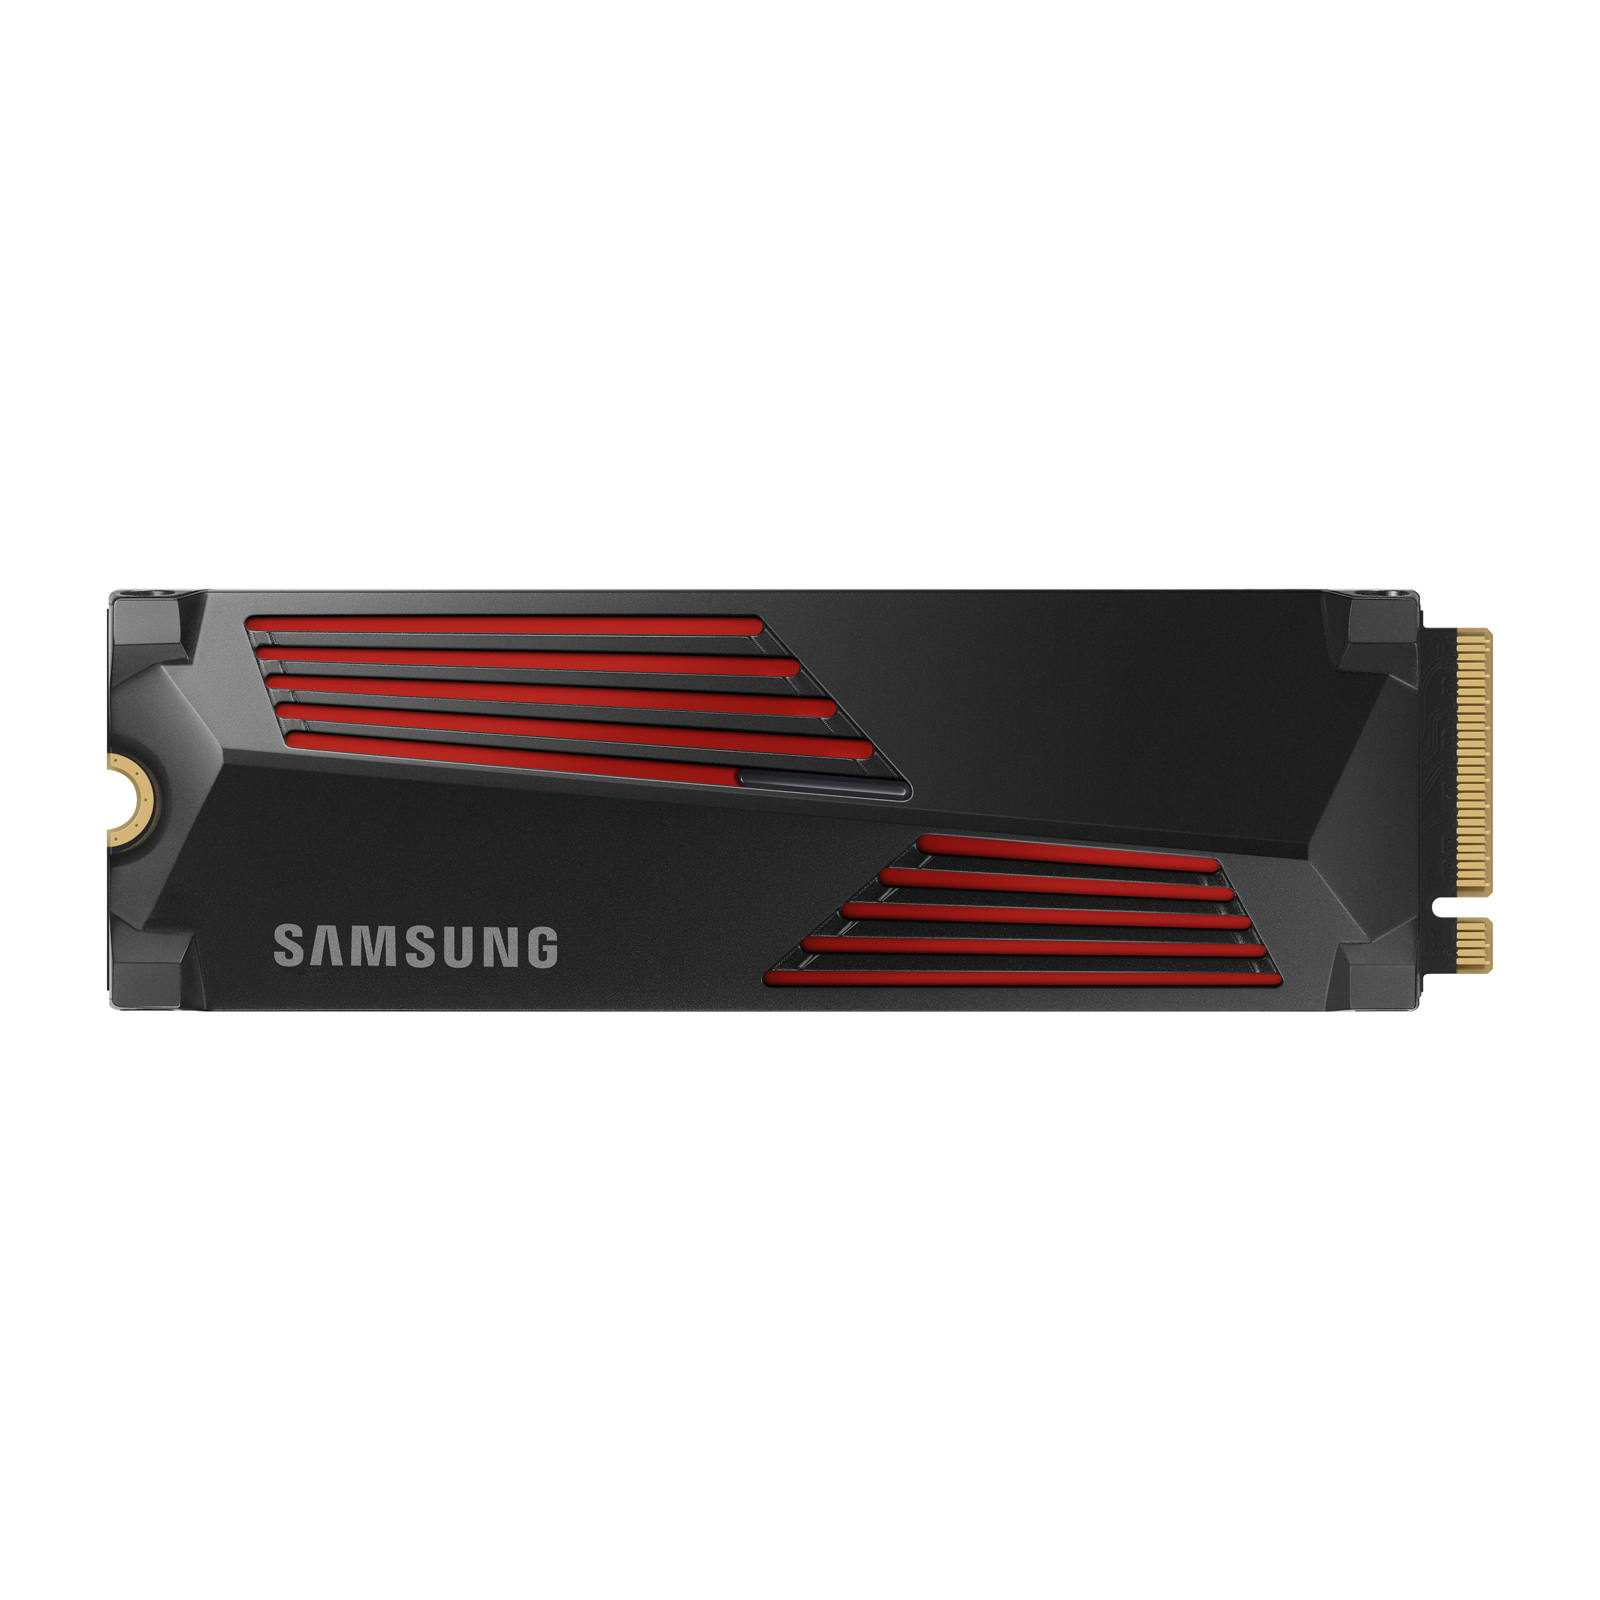 Samsung NVMe M.2 SSD 990 PRO with Heatsink (1TB)